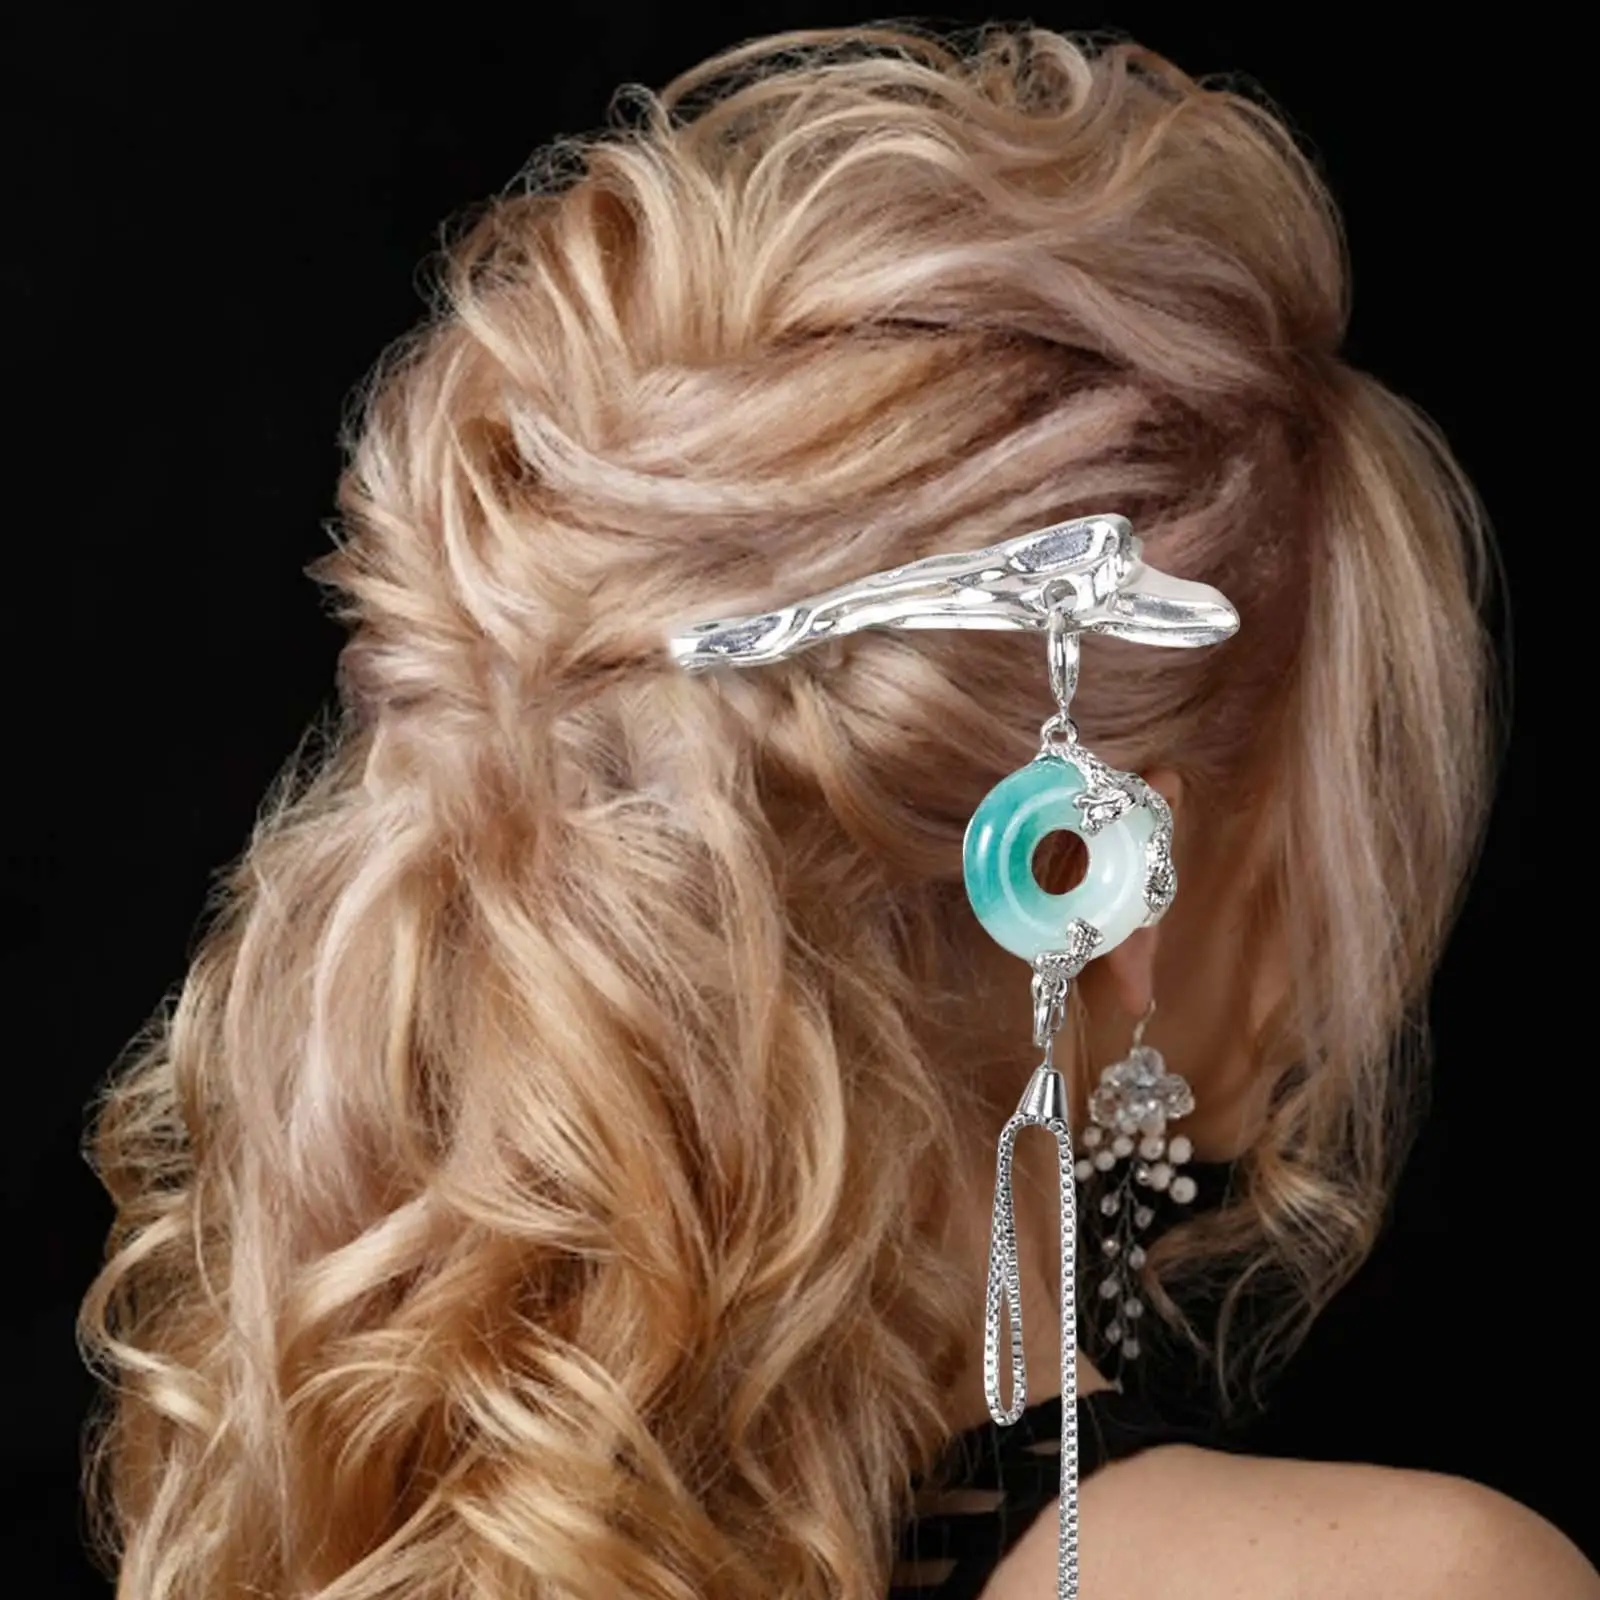 Retro Hairpins Nonslip Metal Hair Accessories Hair Grips Hair Sticks for Women Girls Bridal Wedding Valentines Long Curly Hair